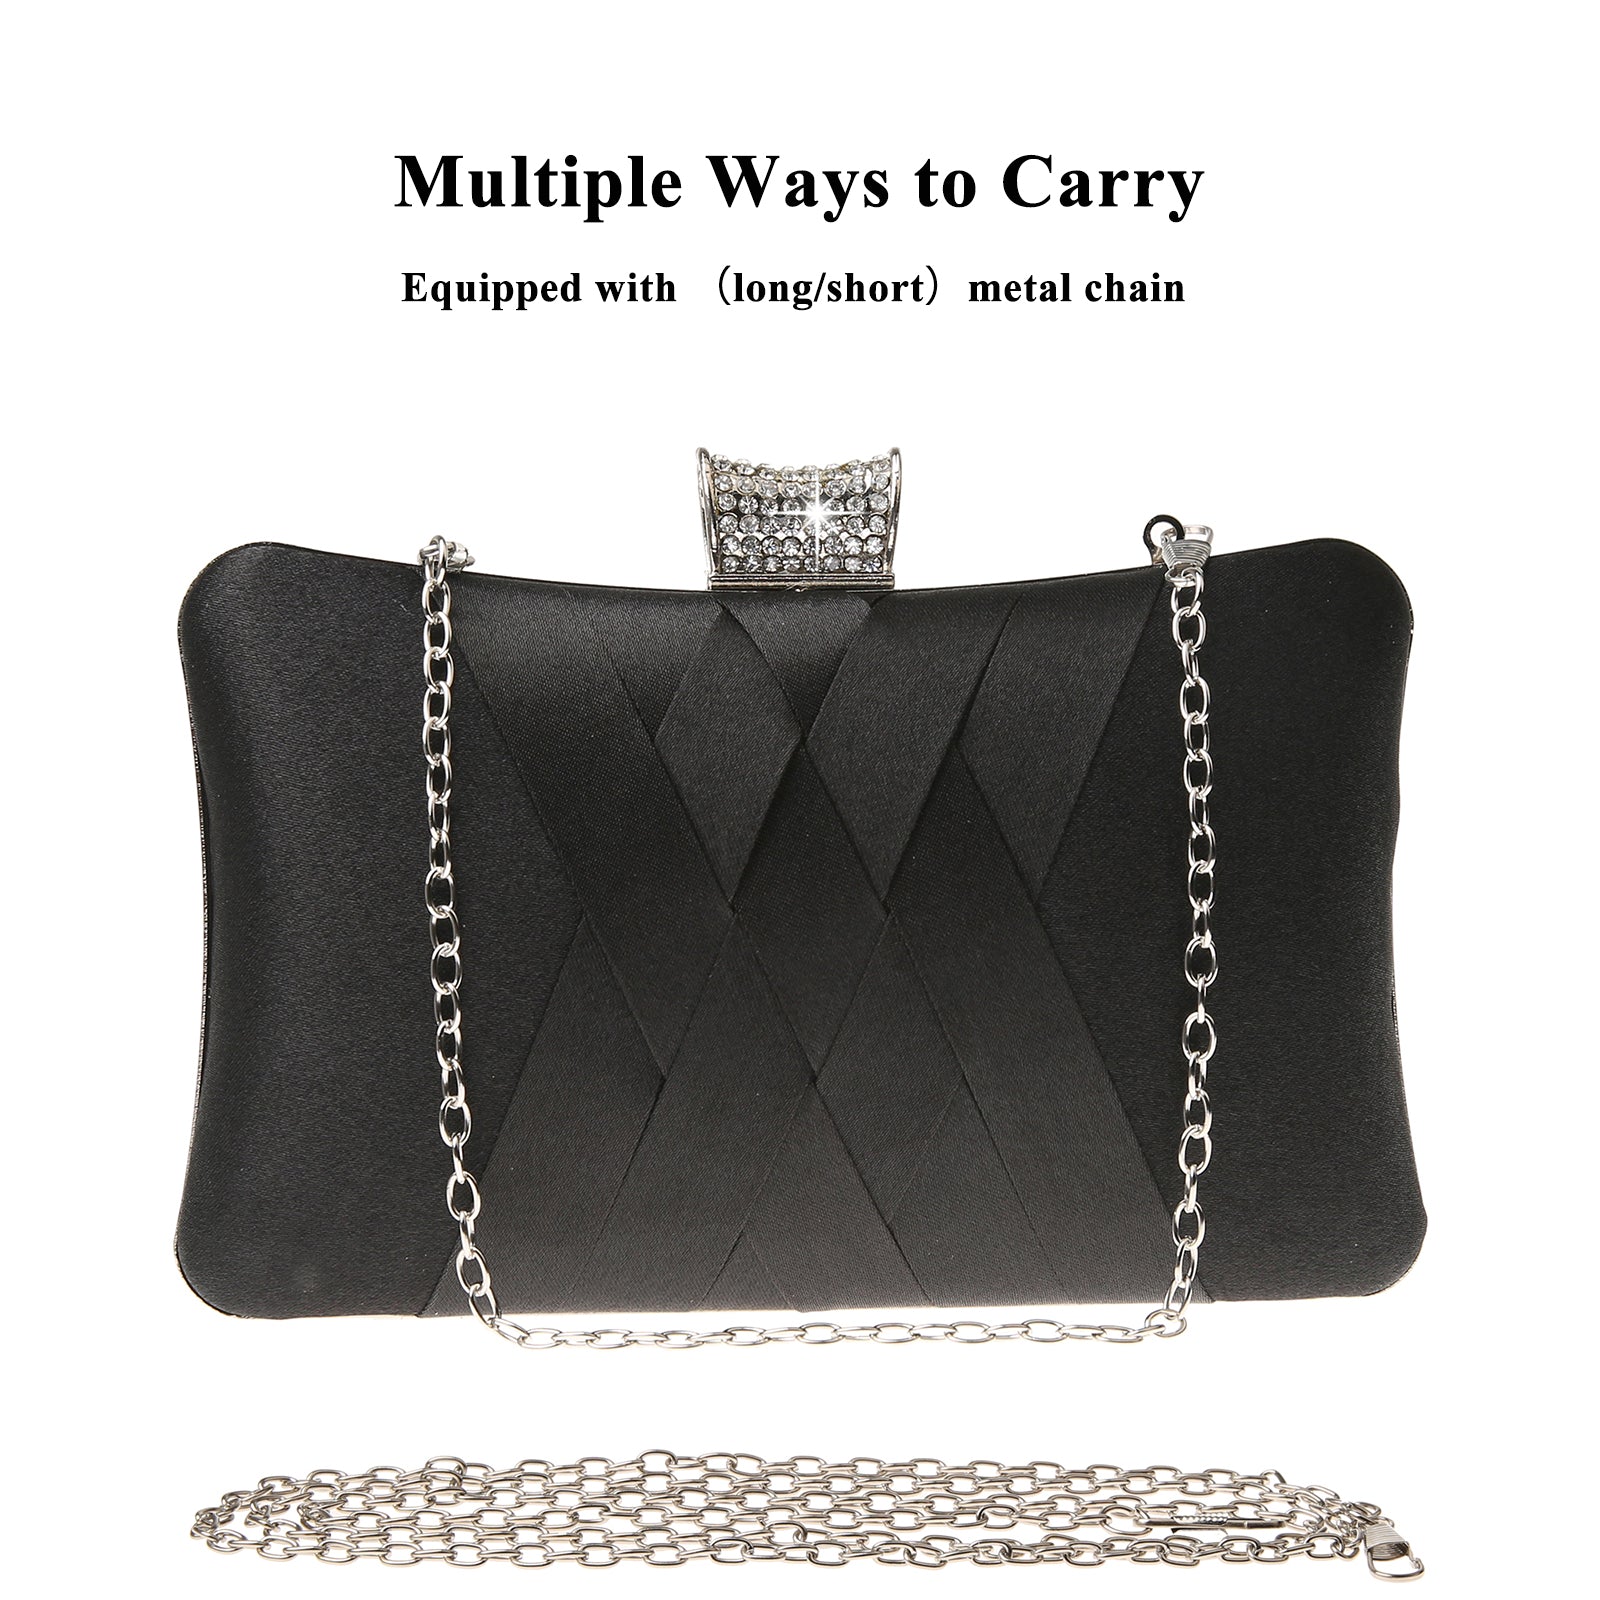 Stylish women's handbag with chain handle. Fashionable black purse with  rhinestones. Vector illustration. 16876456 Vector Art at Vecteezy